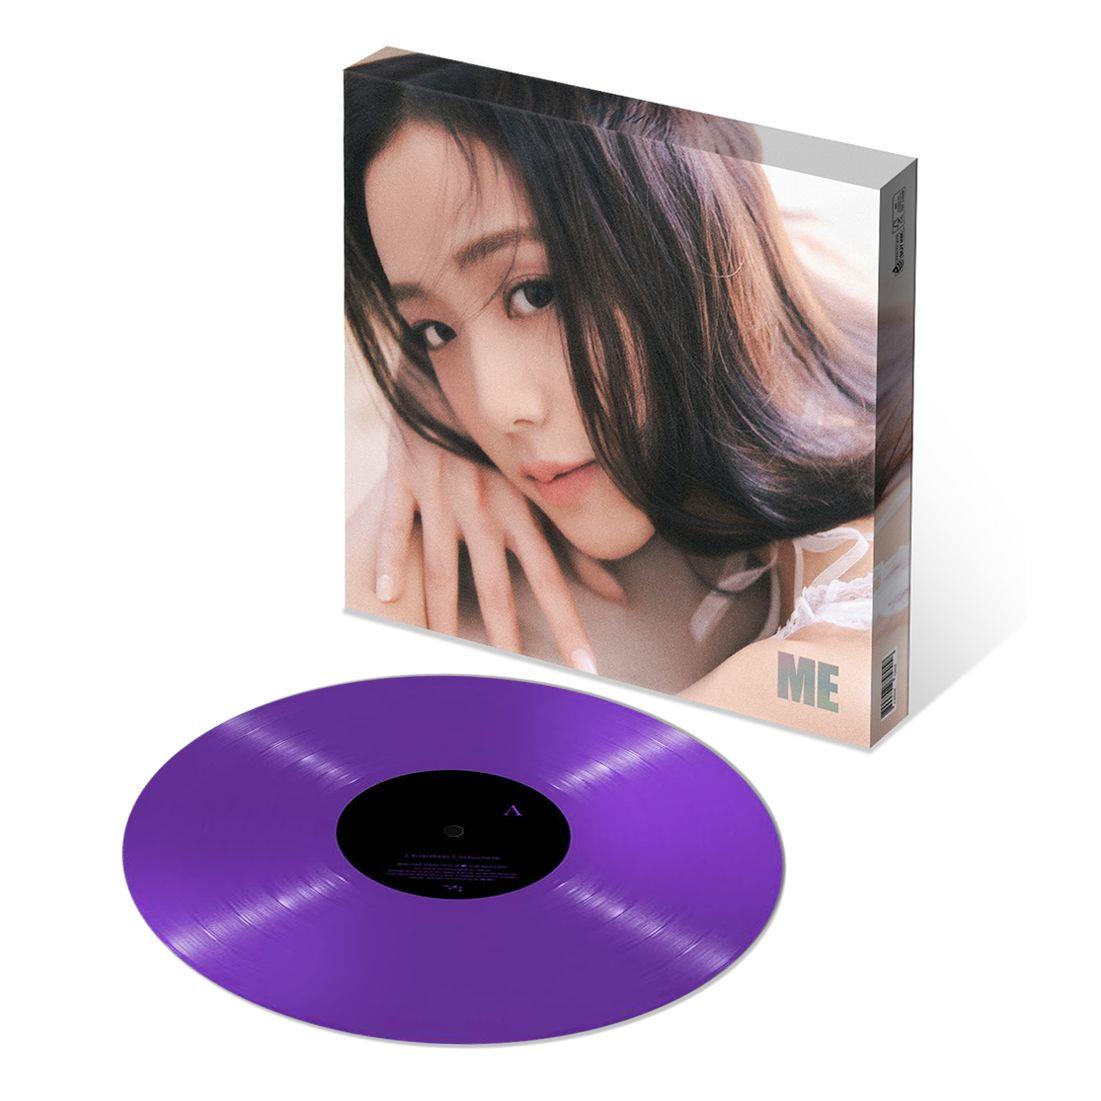 jisoo first single vinyl lp [me] limited edition (clear purple vinyl)